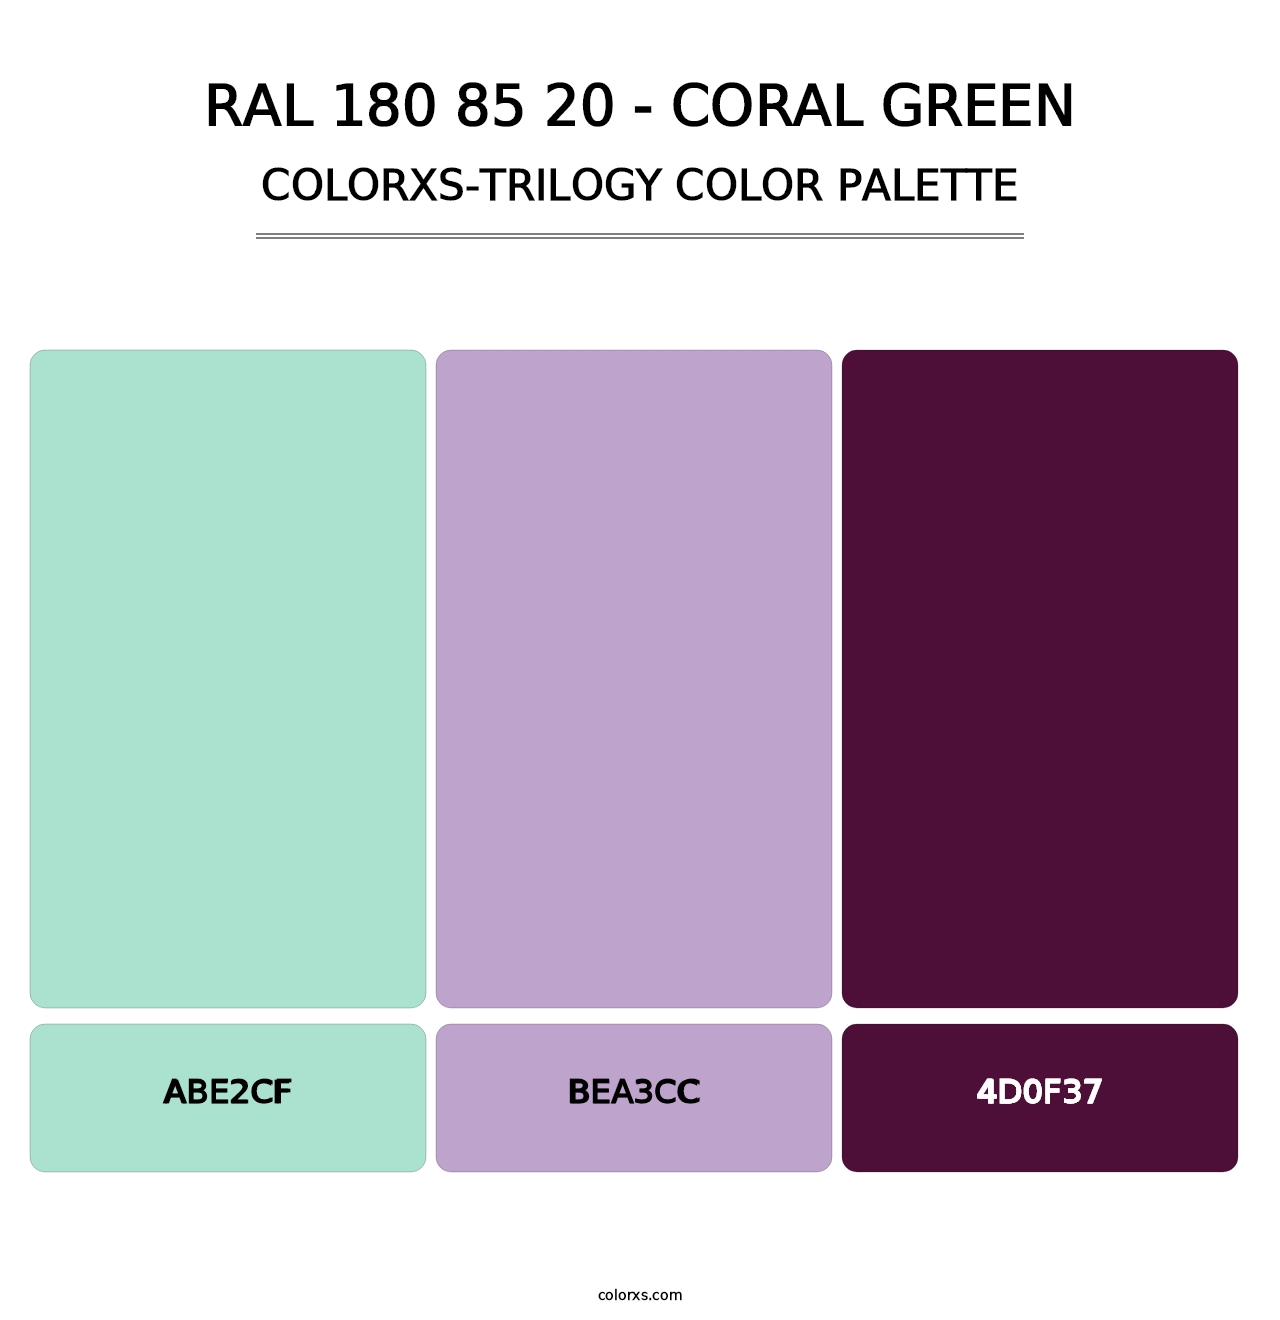 RAL 180 85 20 - Coral Green - Colorxs Trilogy Palette